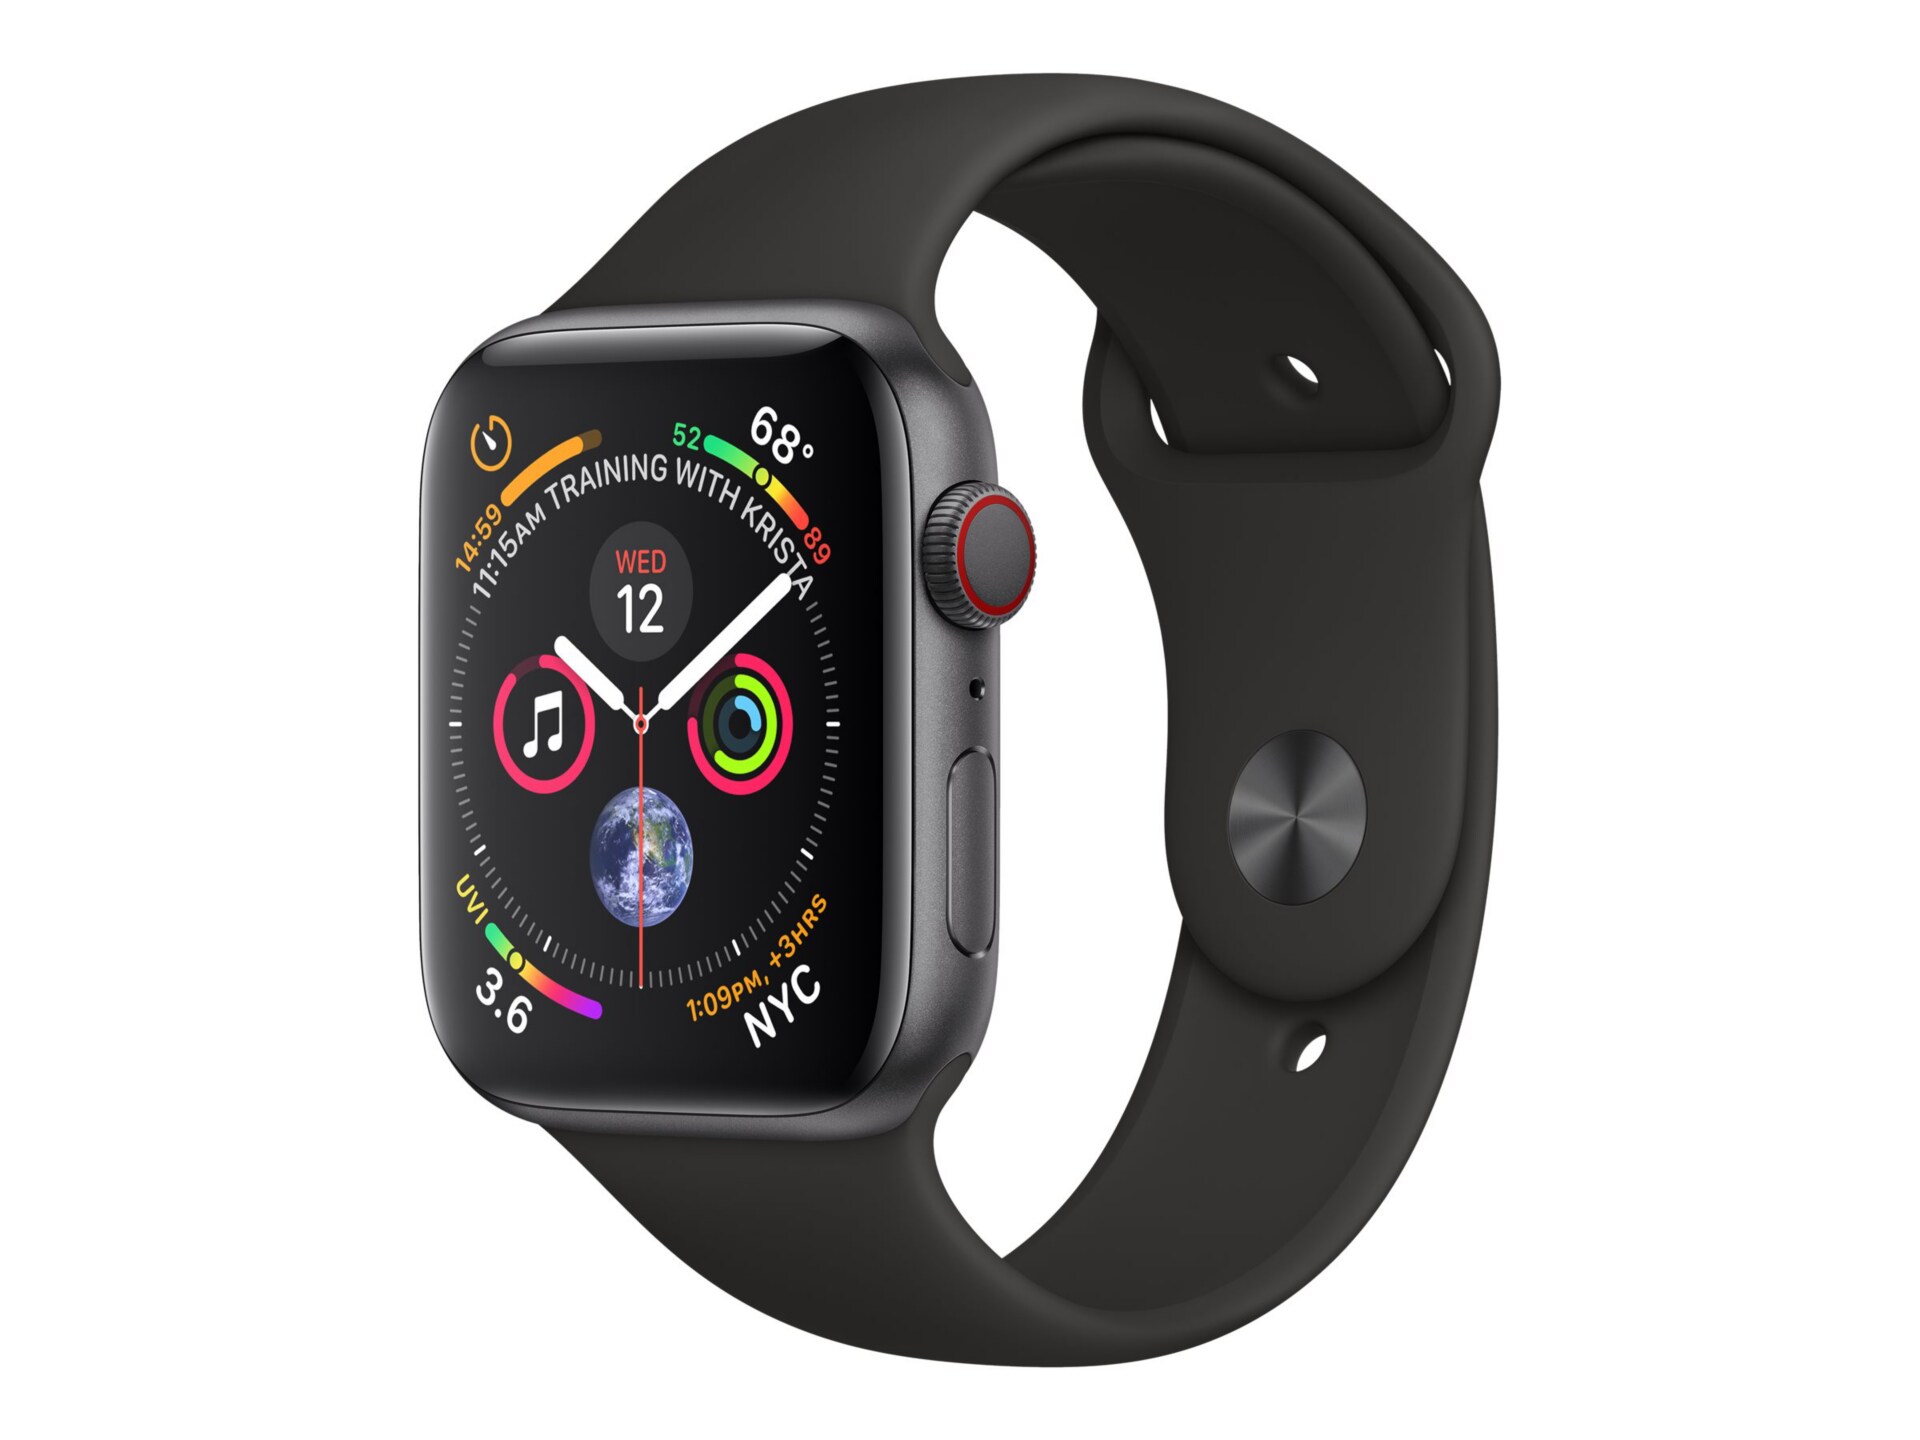 Apple Watch Series 4 (GPS + Cellular) - space gray aluminum - smart watch w